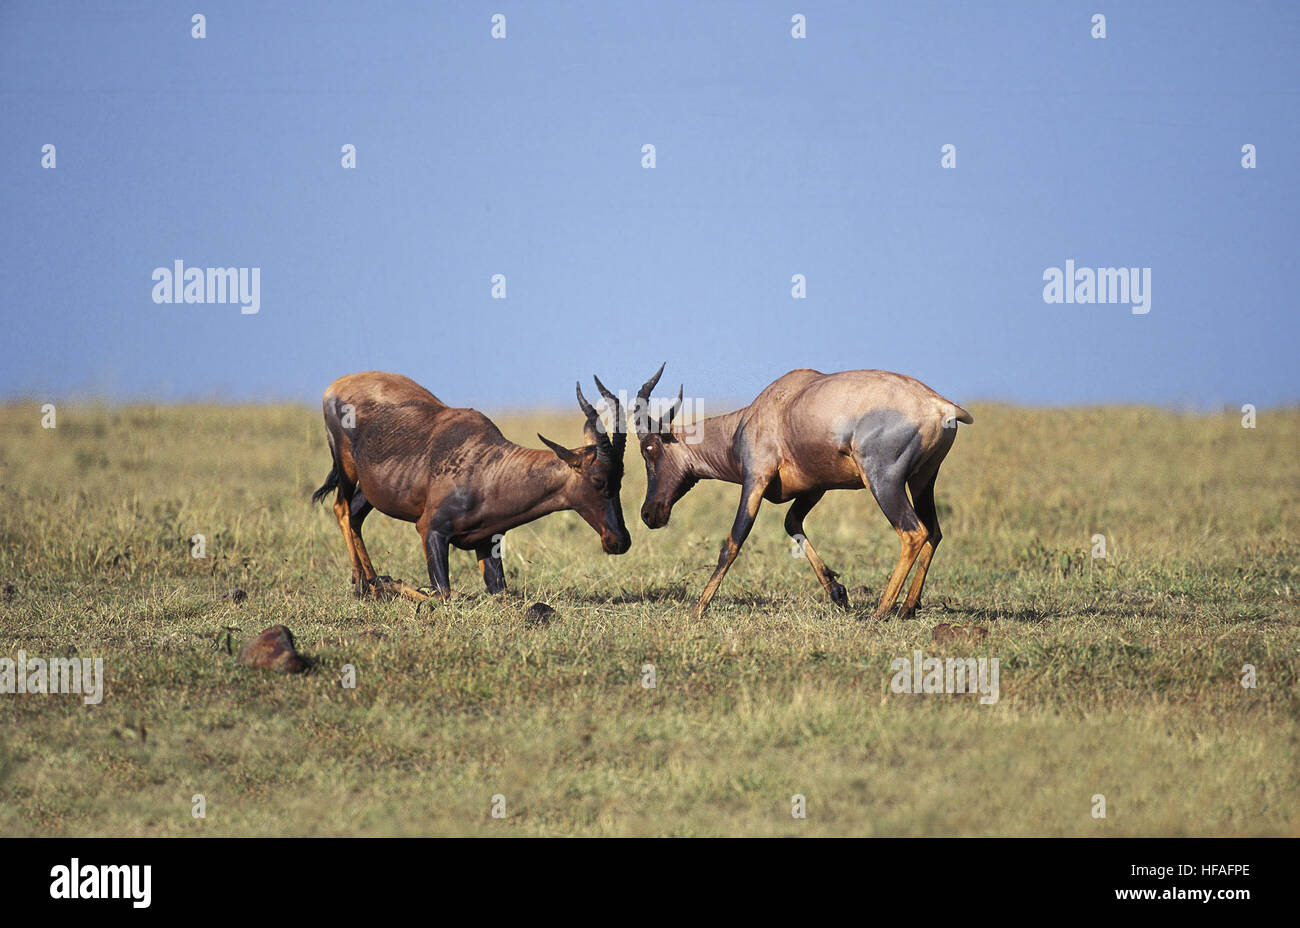 Topi,  damaliscus korrigum, Males Fighting, Masai Mara Park in Kenya Stock Photo